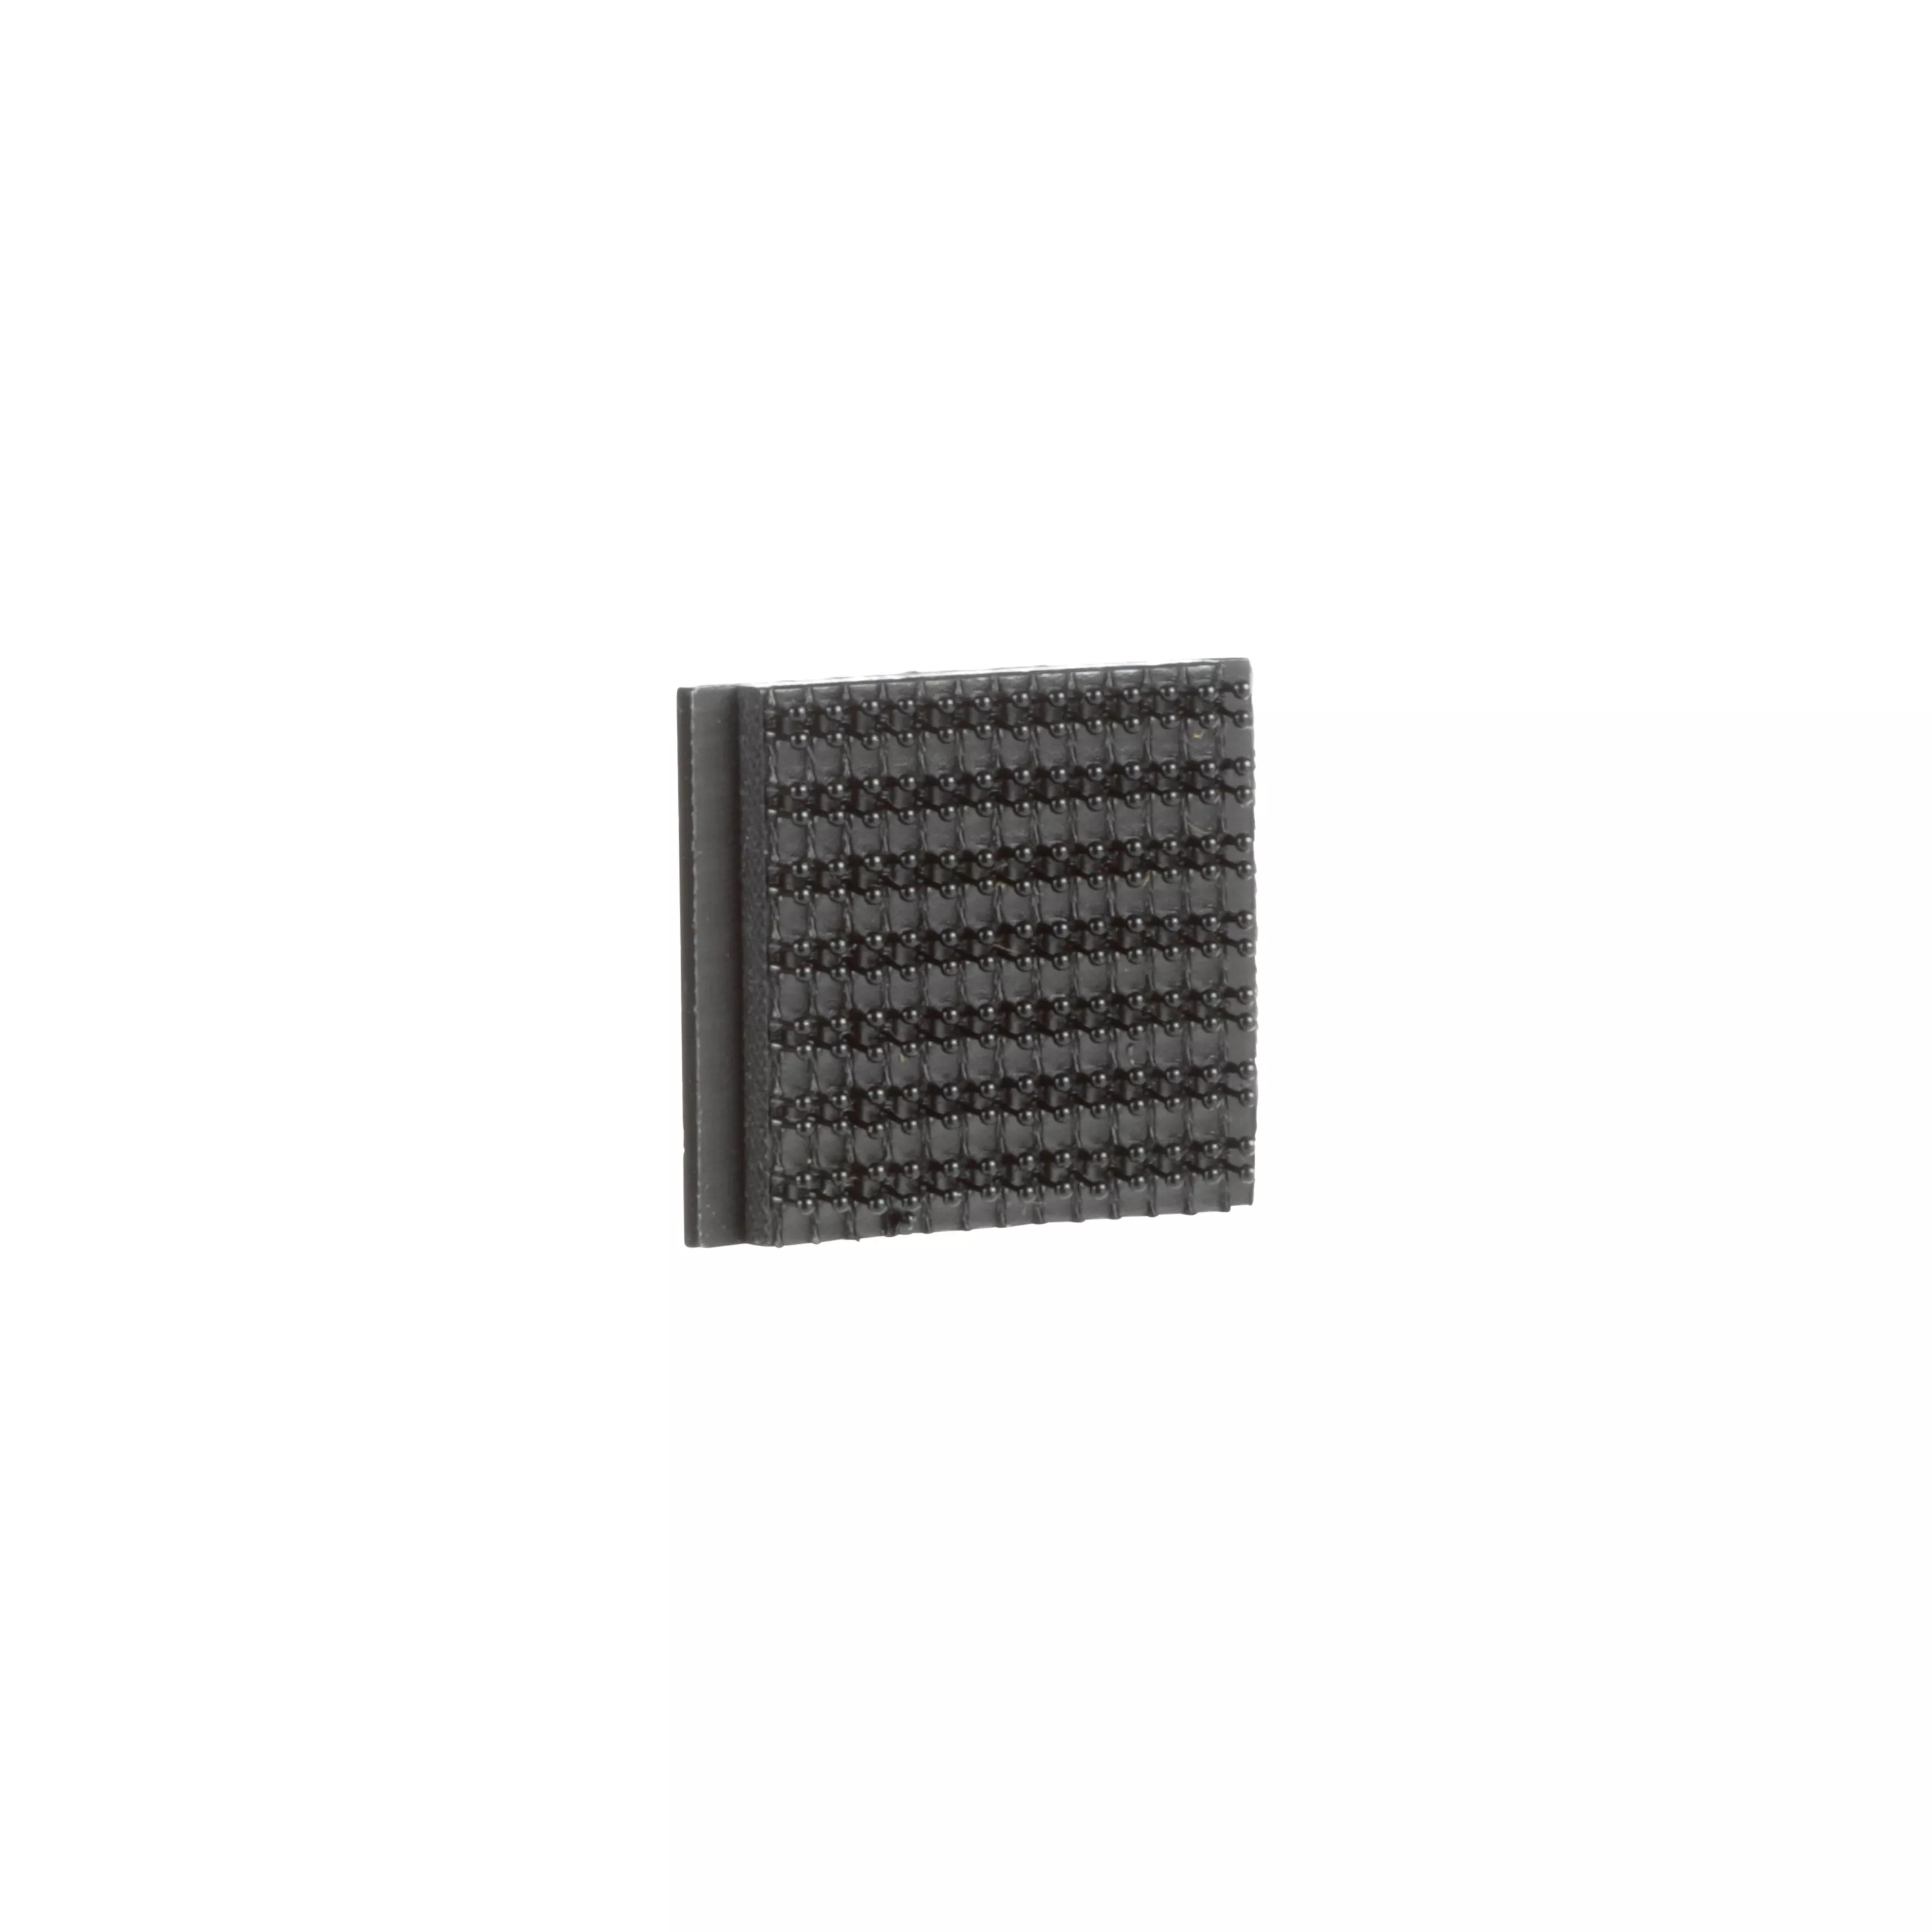 3M™ Dual Lock™ Reclosable Fastener SJ3736, Black, Slide-in Piece Part,
Stem Density 170, 5000 Each/Case